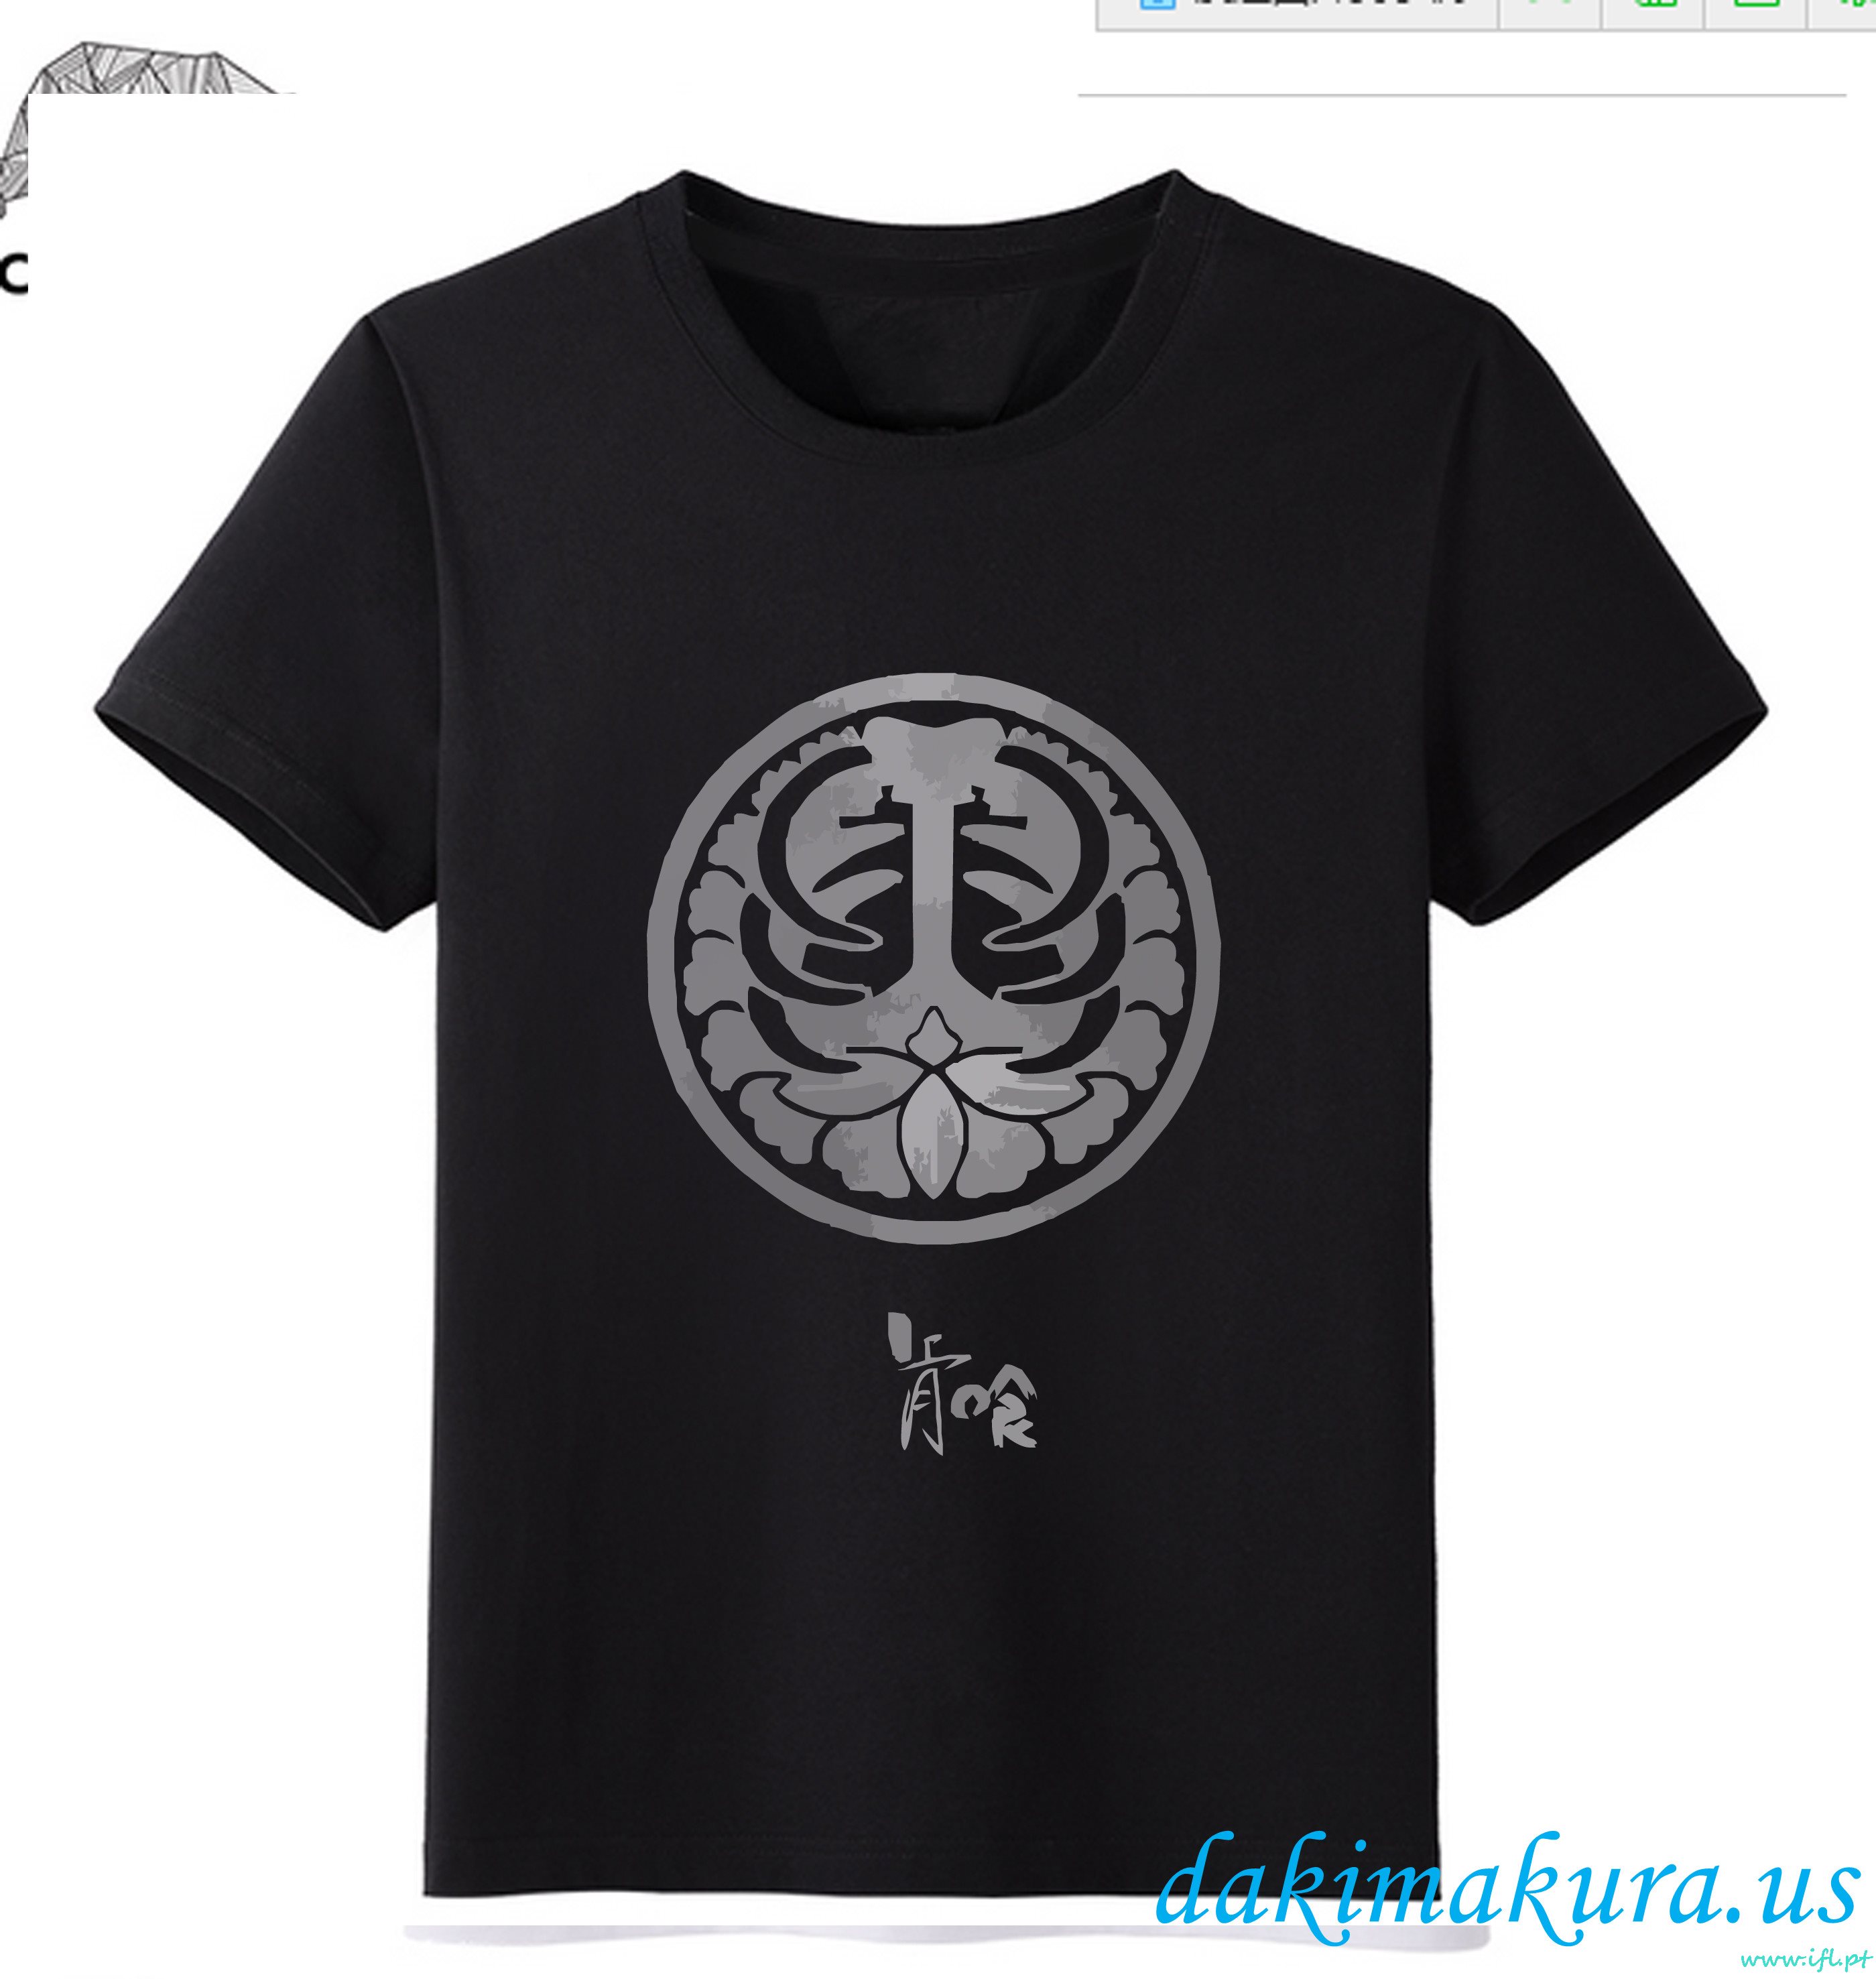 Cheap Black - Touken Ranbu Online Men Anime Fashion T-shirts From China Factory